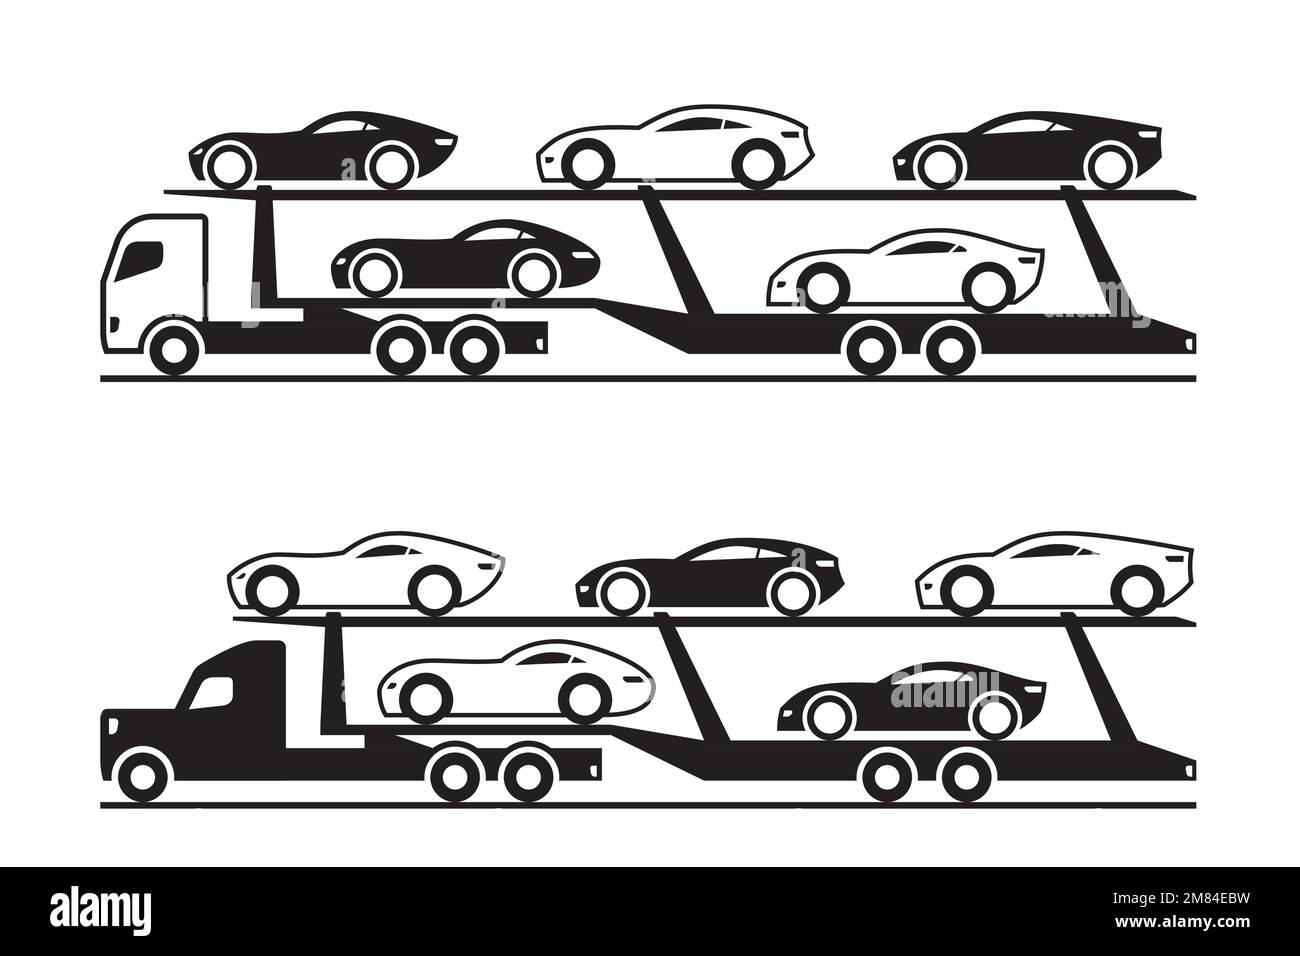 Autotrasportatori con veicoli sportivi - illustrazione vettoriale Illustrazione Vettoriale